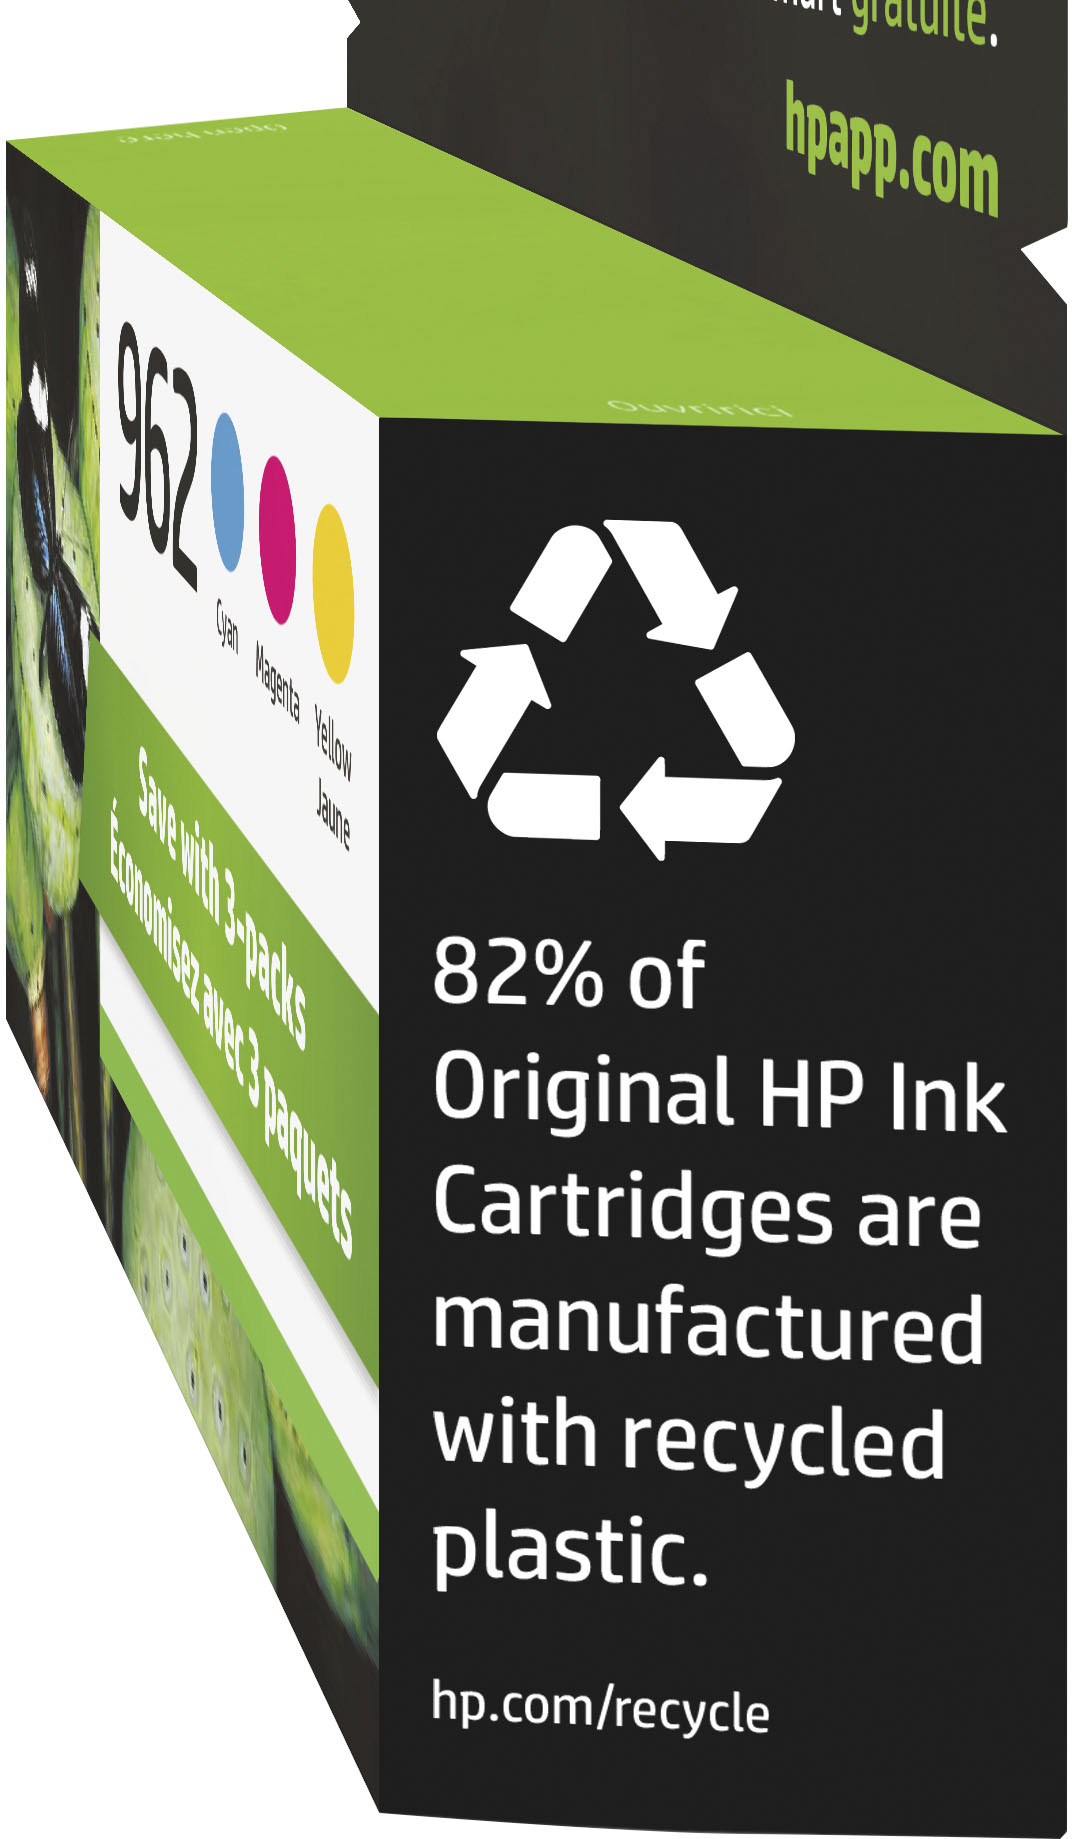 HP - 962 3-Pack Standard Capacity Ink Cartridges - Cyan/Magenta/Yellow